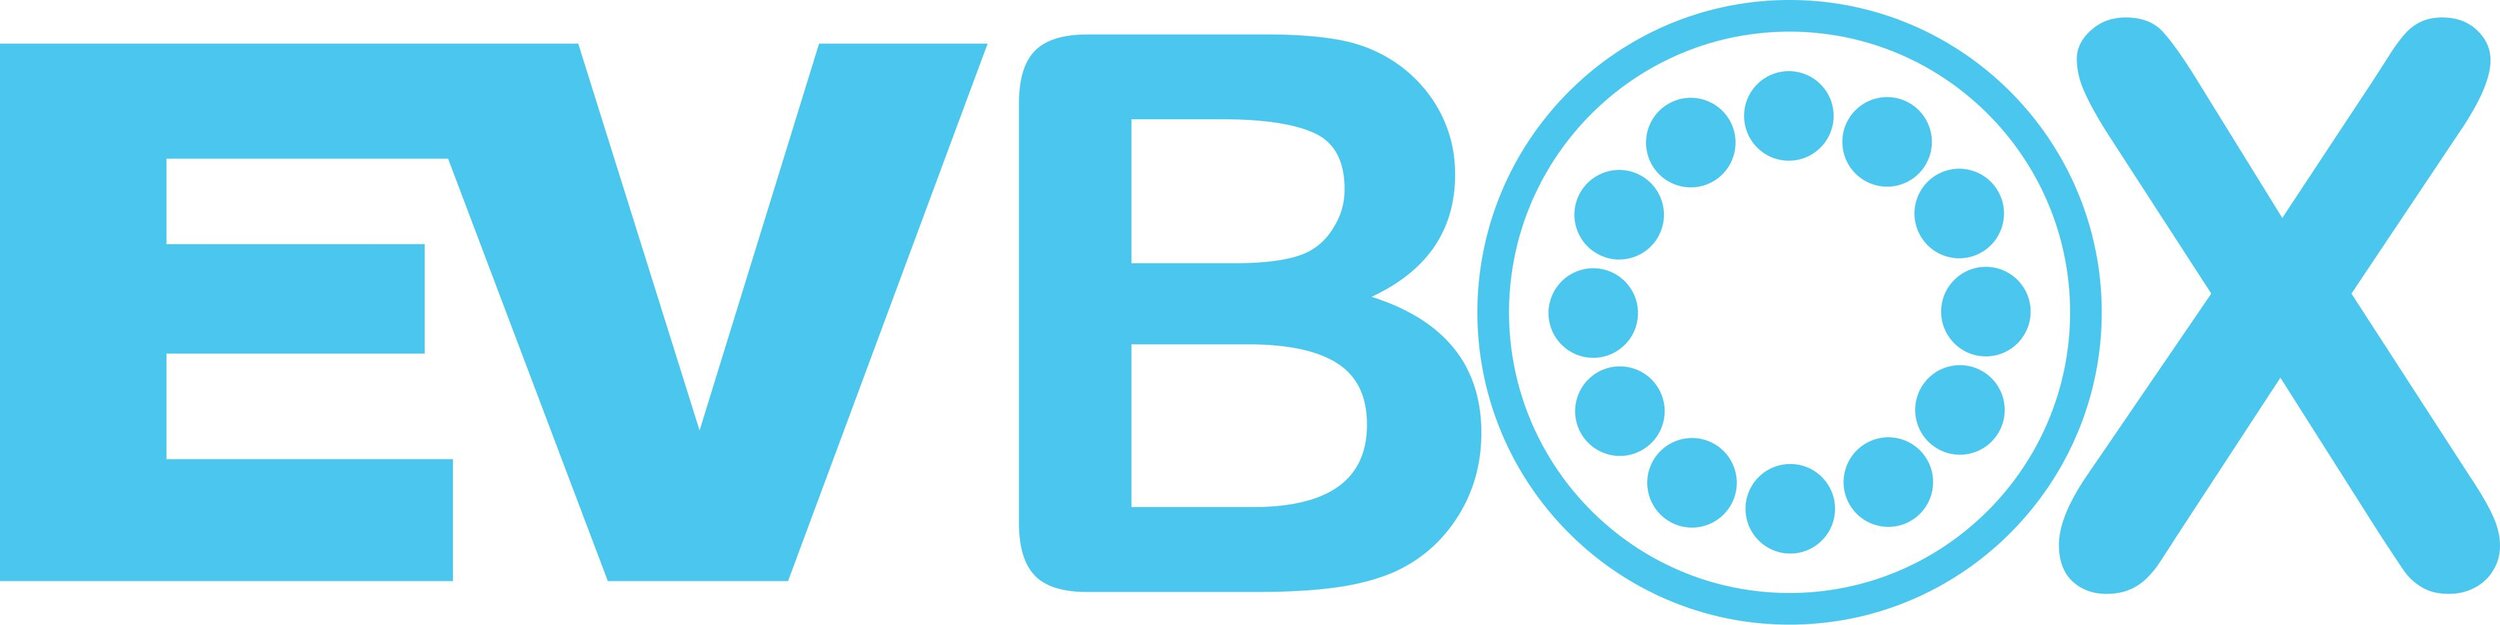 EVBox logo.jpg